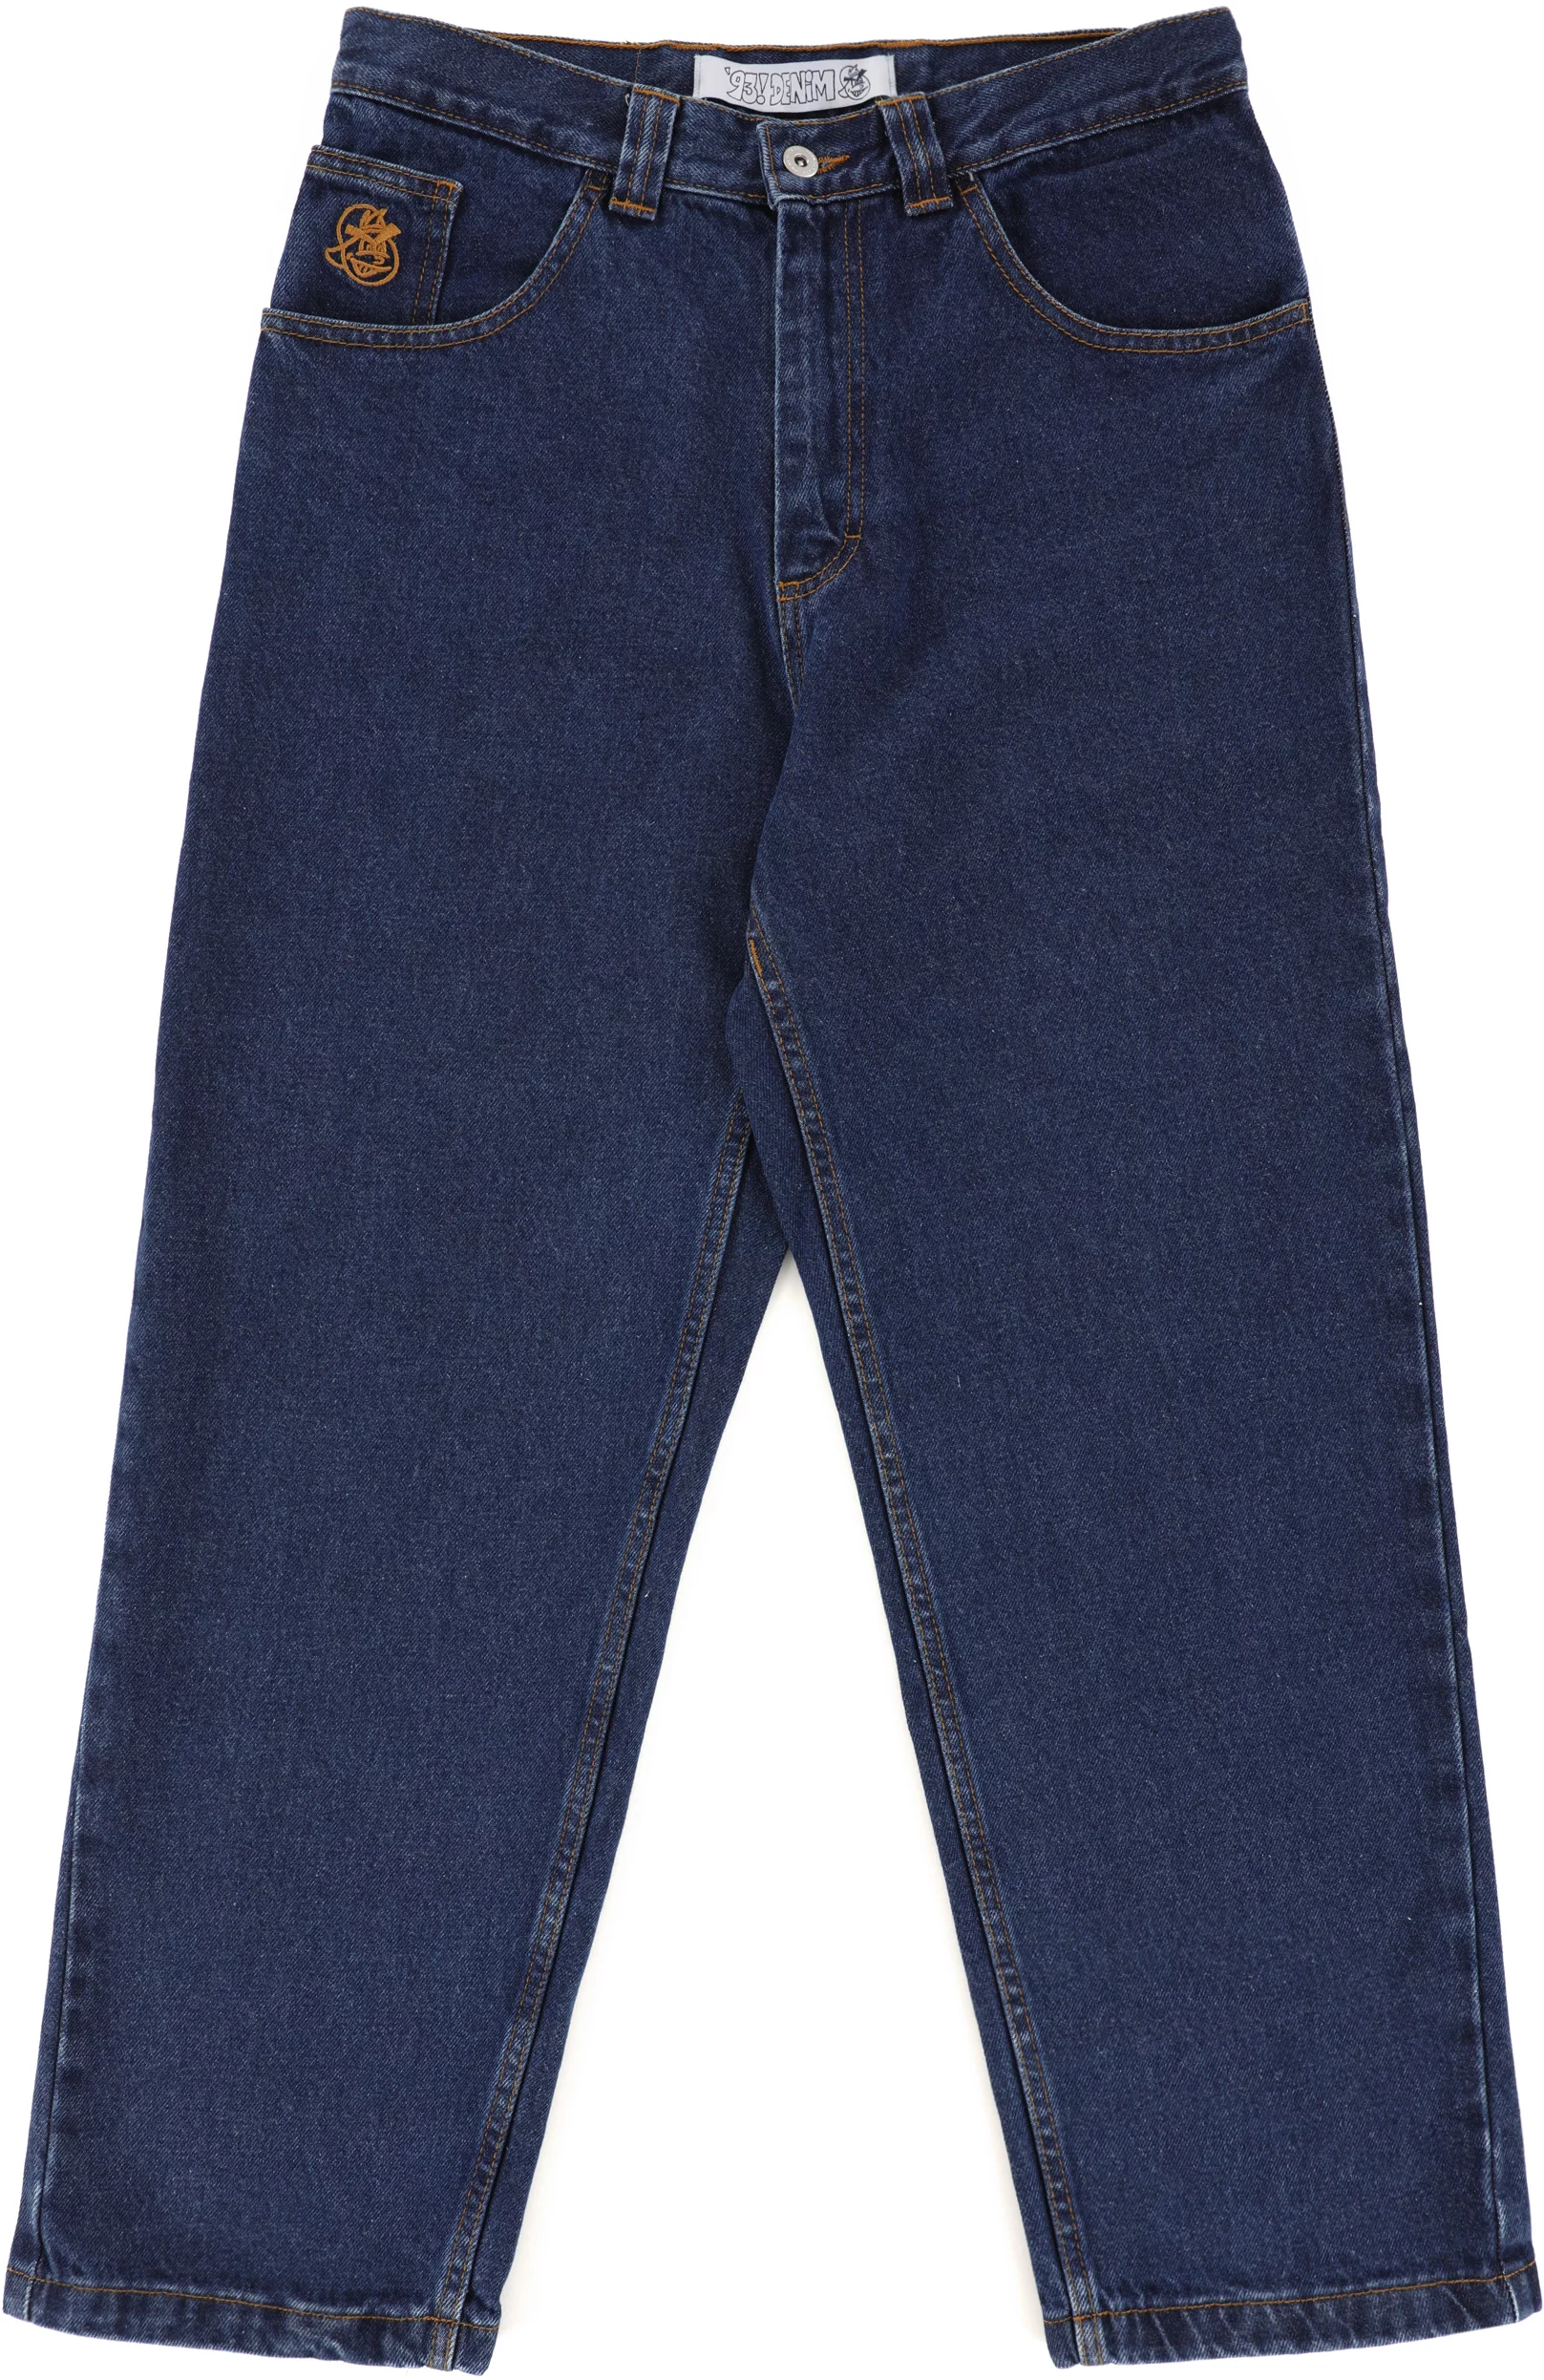 Mid Blue - Polar 93 Denim dye Jeans - cross logo swimming shorts